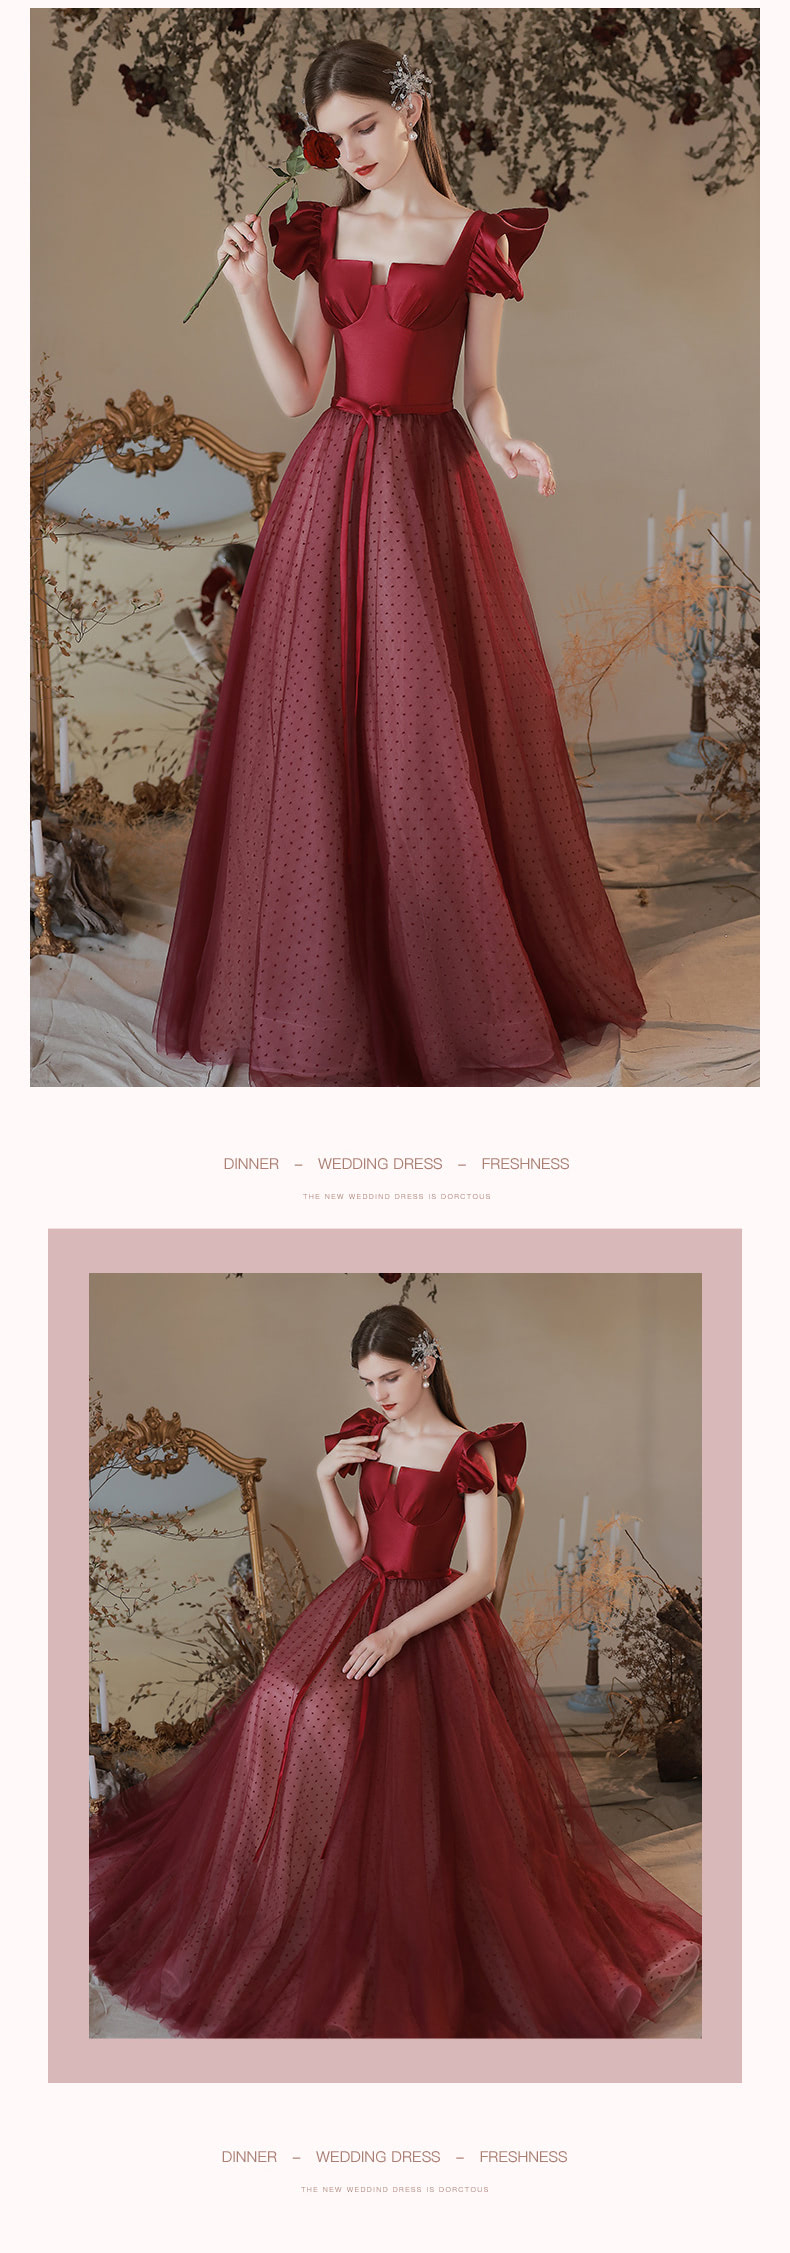 Sleeveless-Red-Satin-Prom-Dress-Long-Evening-Formal-Wear-Ballgown12.jpg